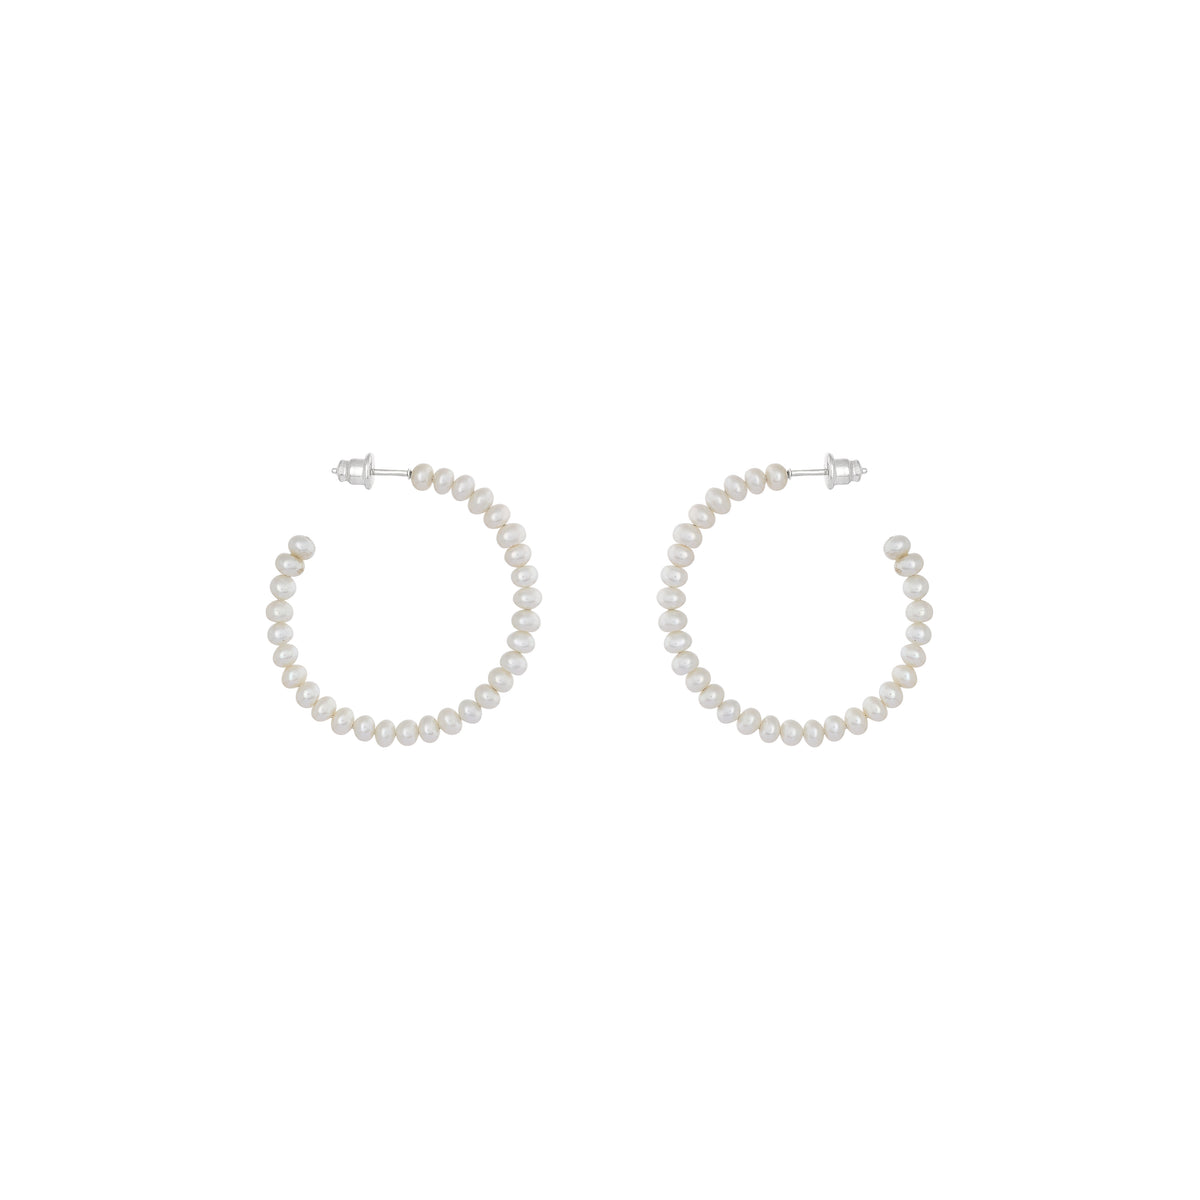 VIKA jewels pearl earrings statement Ohrringe handmade Bali recycled recycling sterling silver silber hoops fashion jewellery jewelry